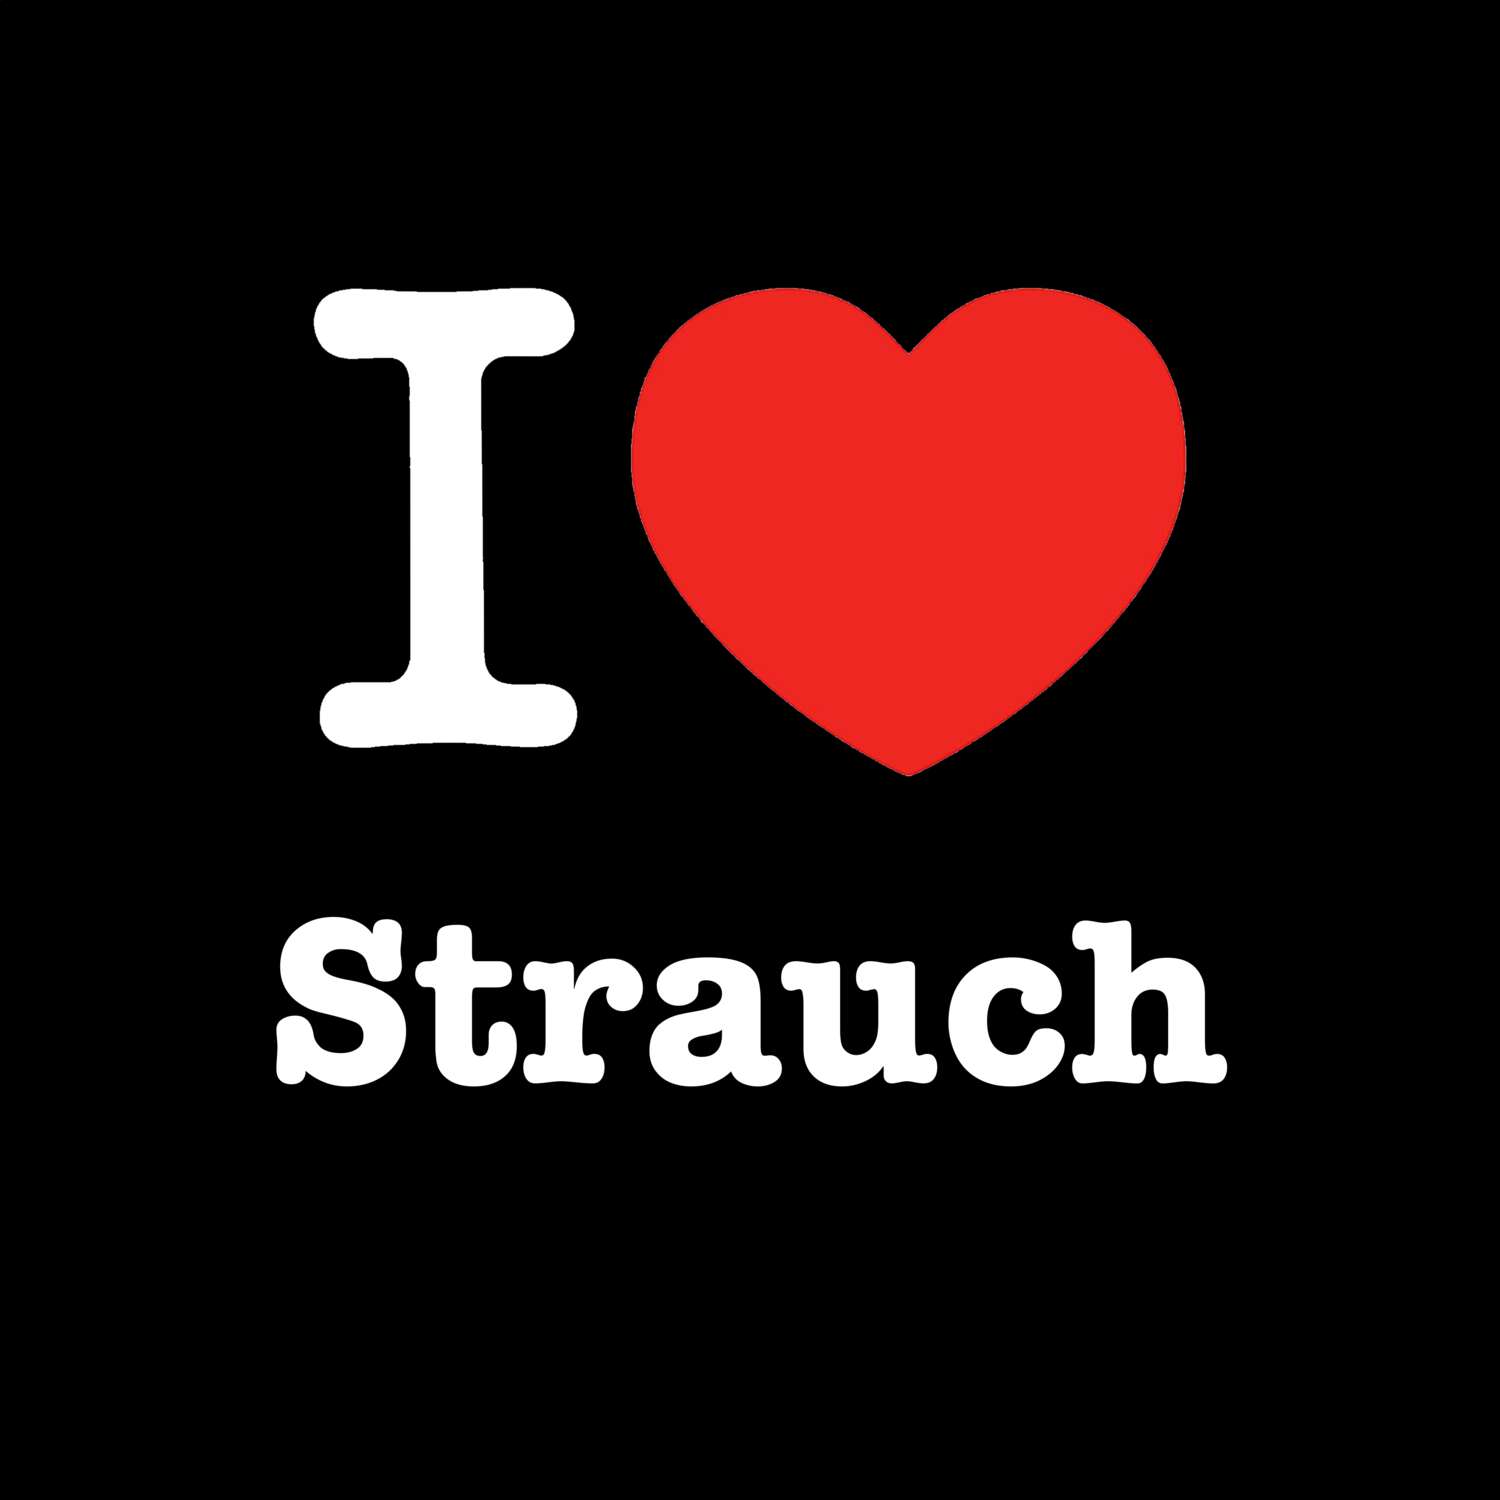 Strauch T-Shirt »I love«